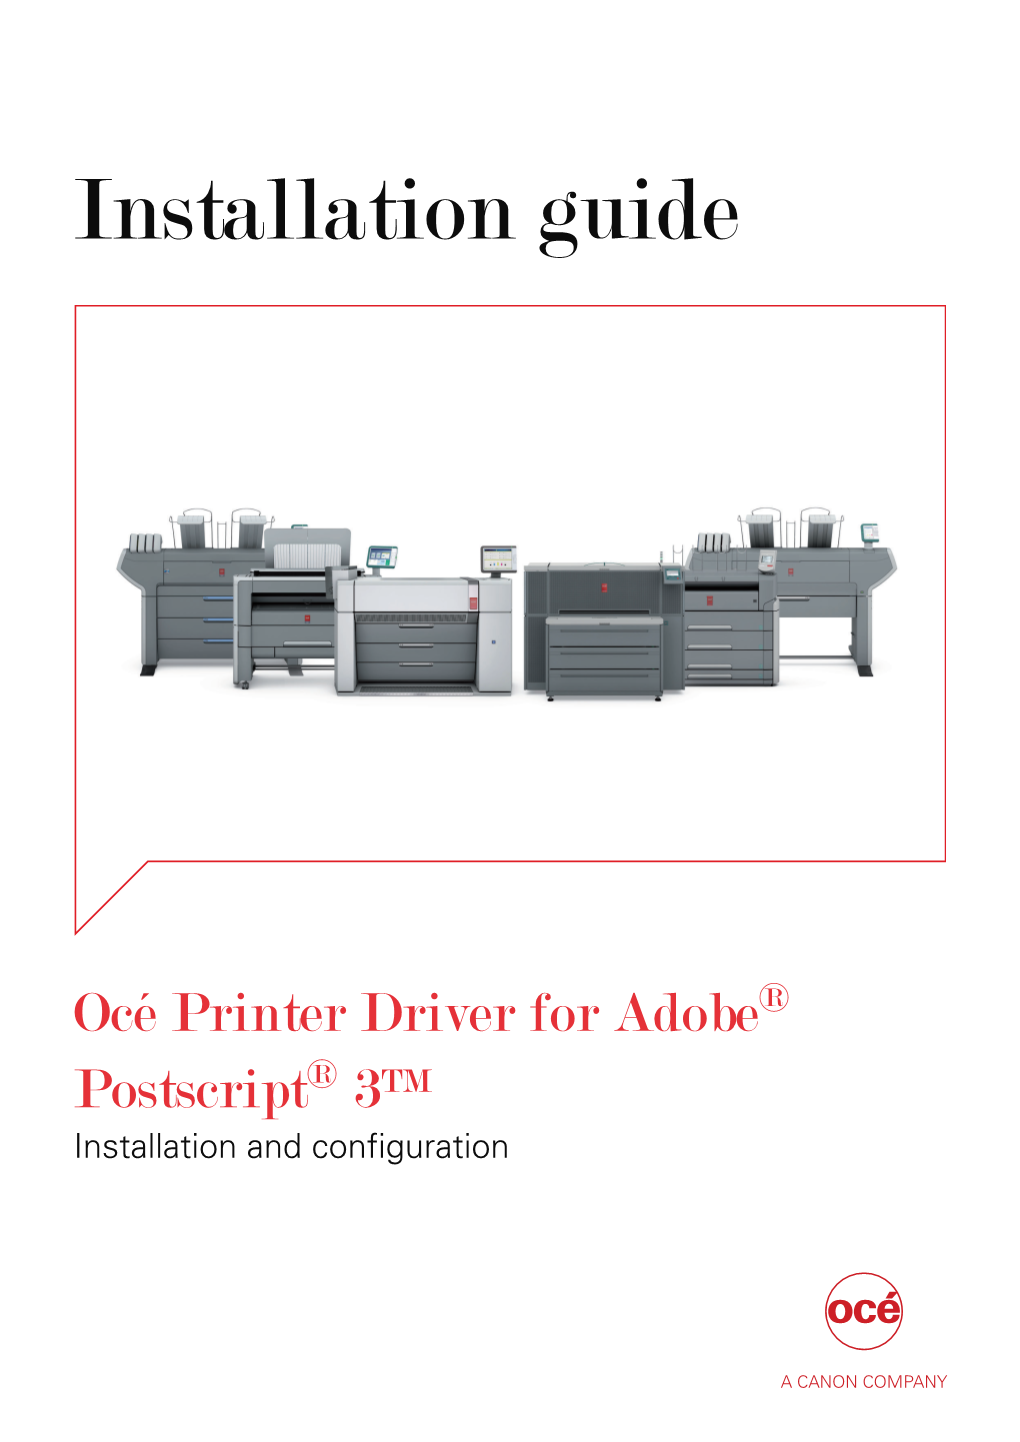 Océ Printer Driver for Adobe® Postscript® 3 Installation Guide